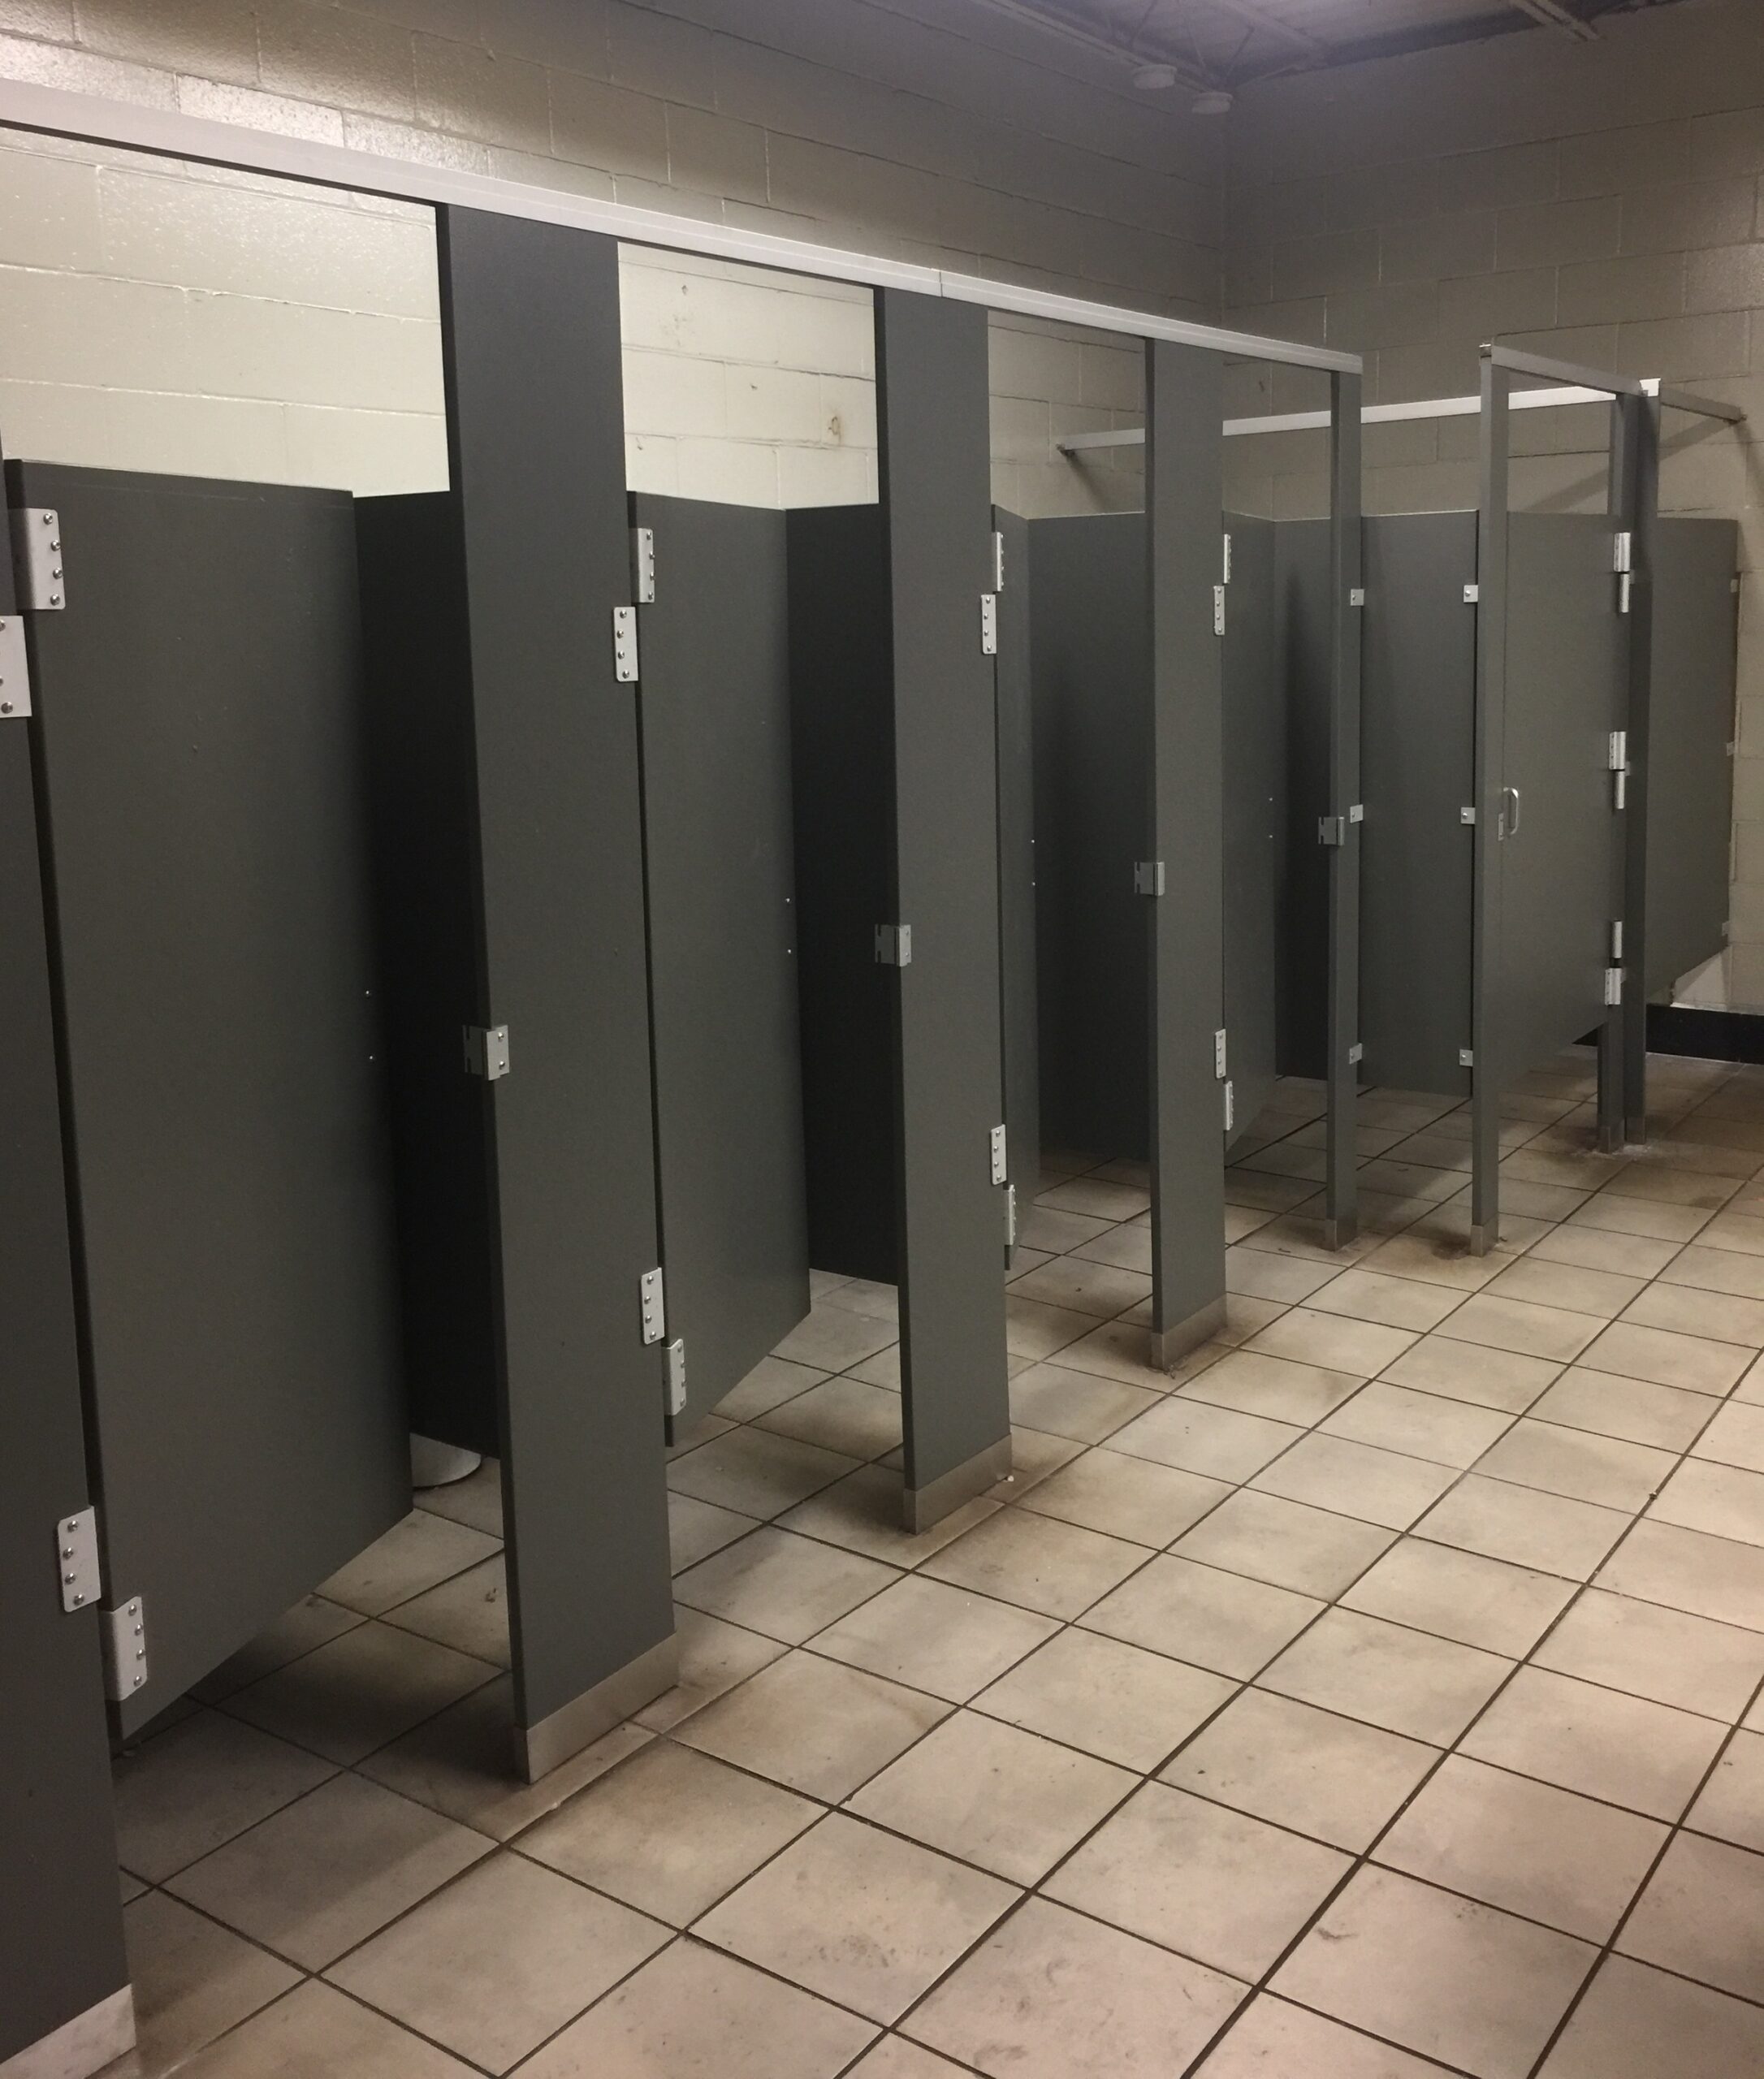 Bathroom Stall Dividers